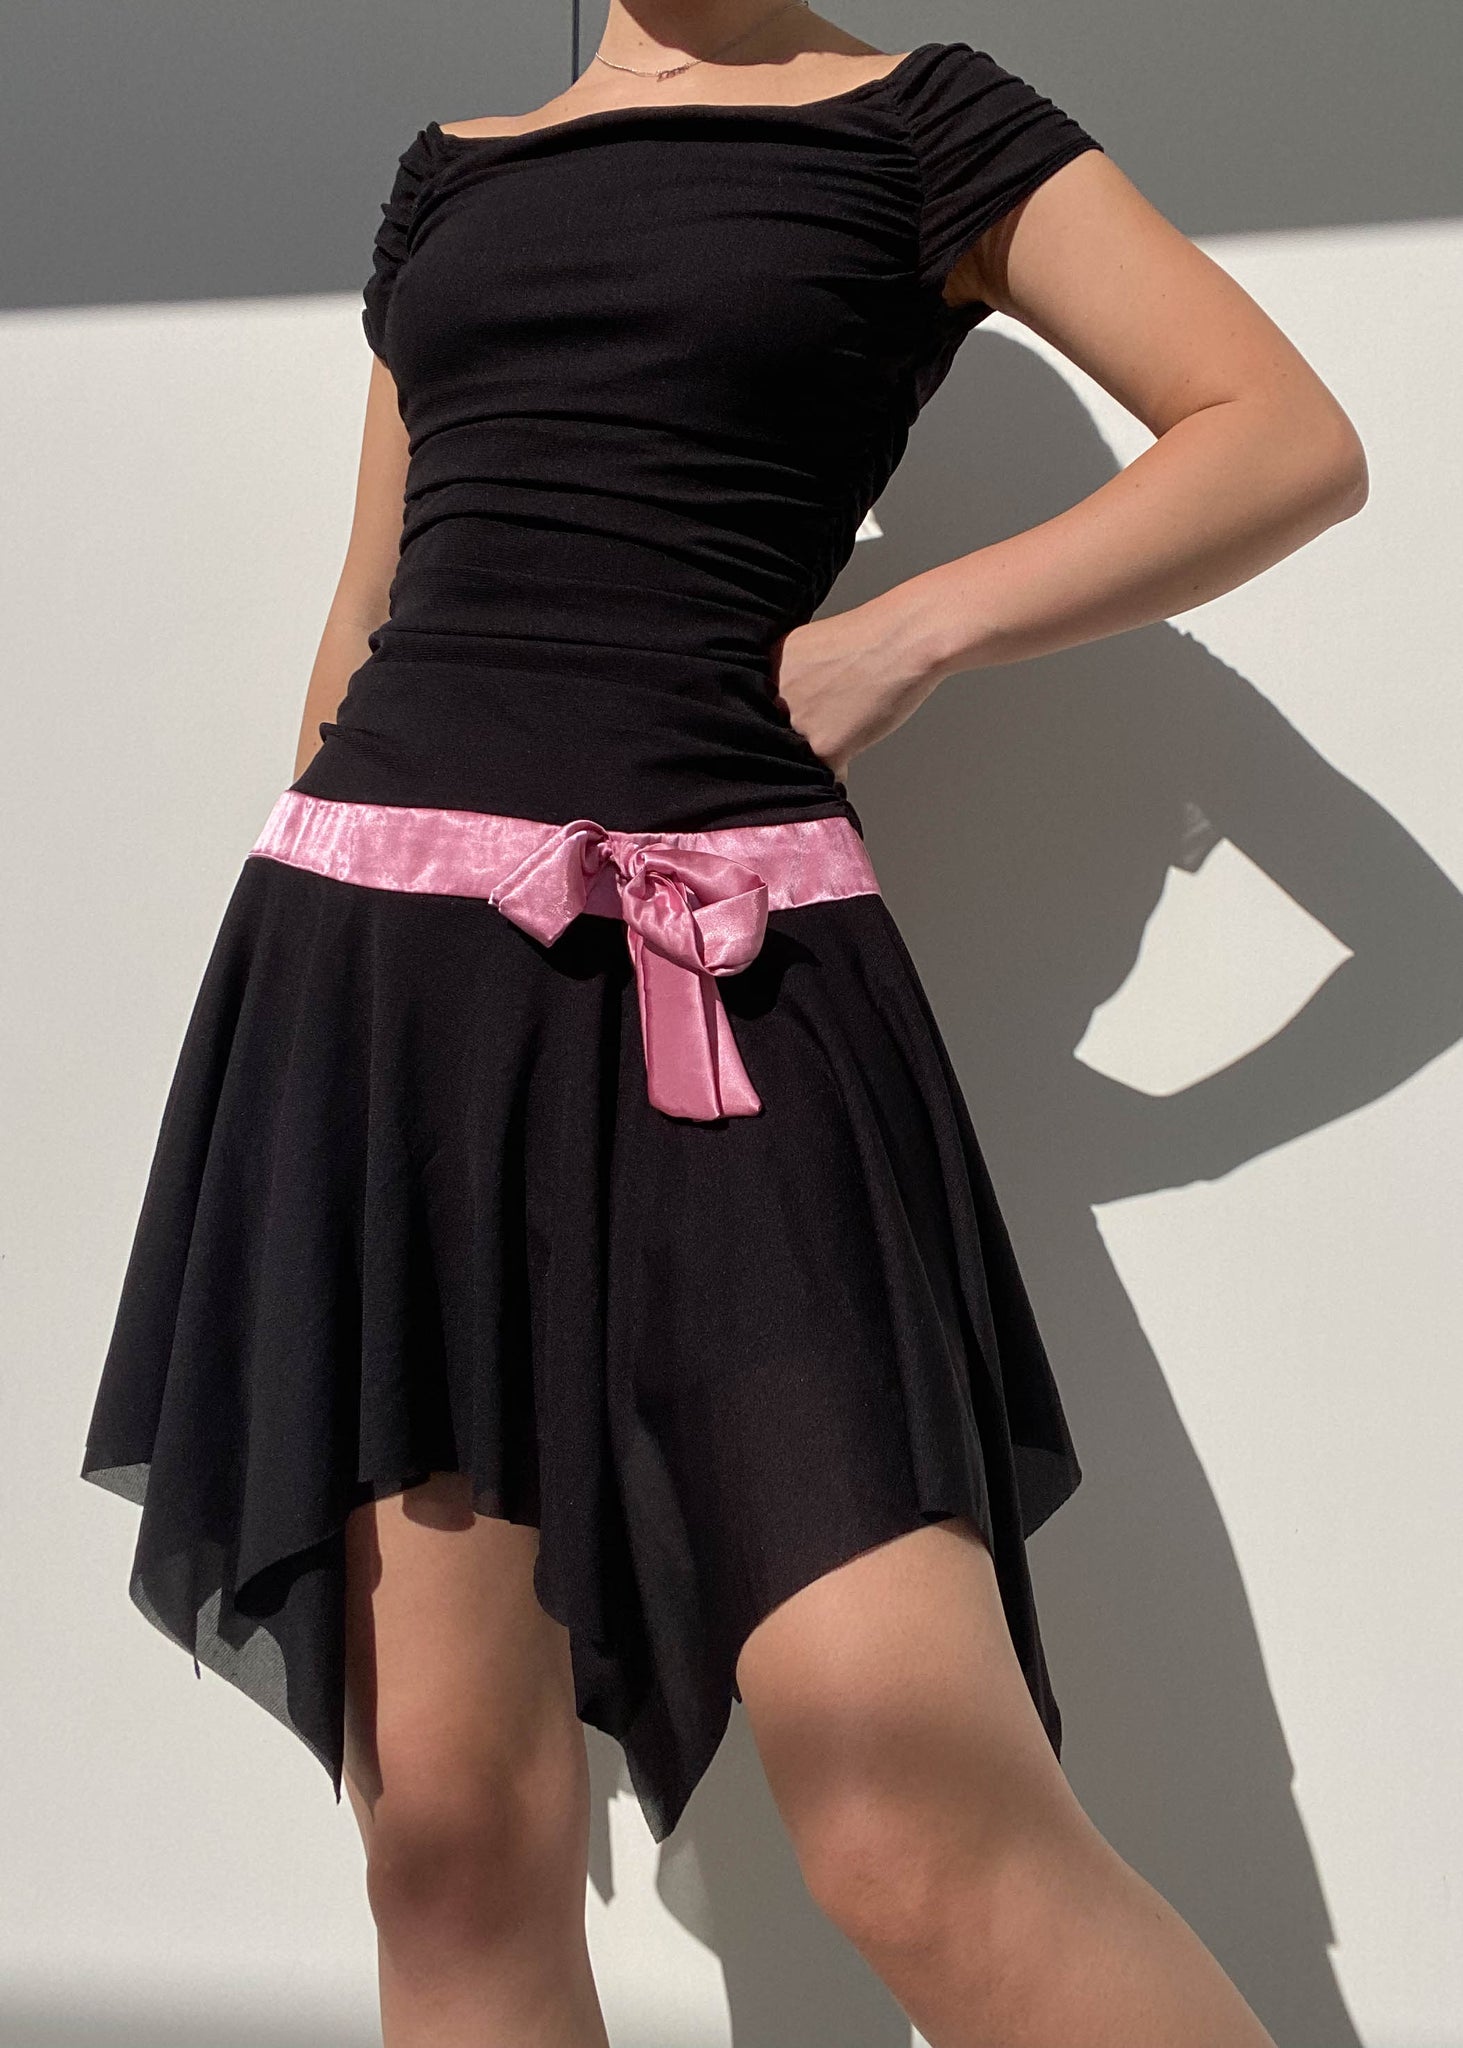 Jasmine Y2k Pink and Black Dress (M)